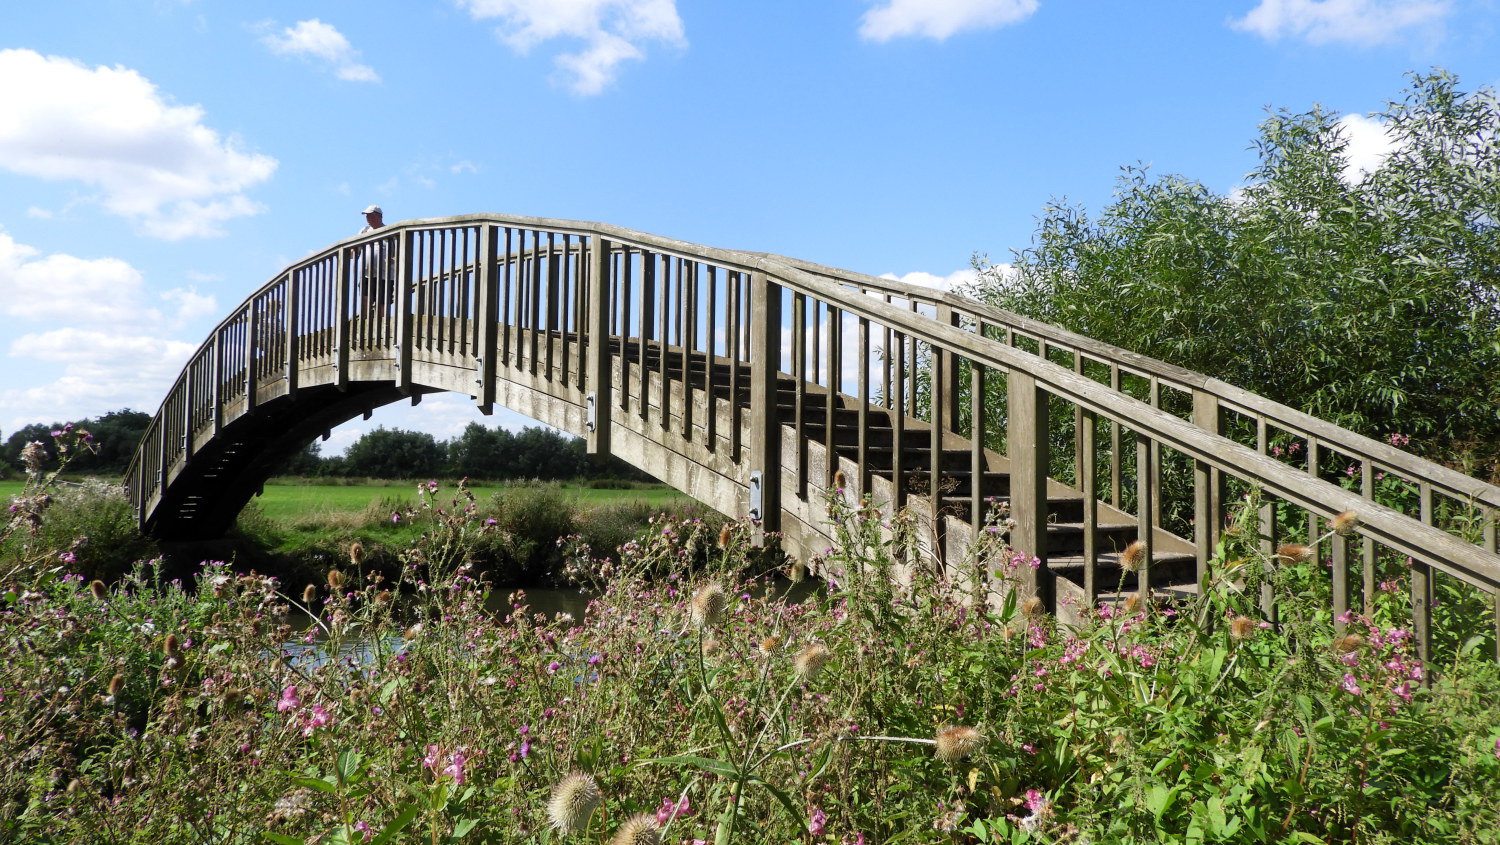 Footbridge across the Thames near Kelmscott